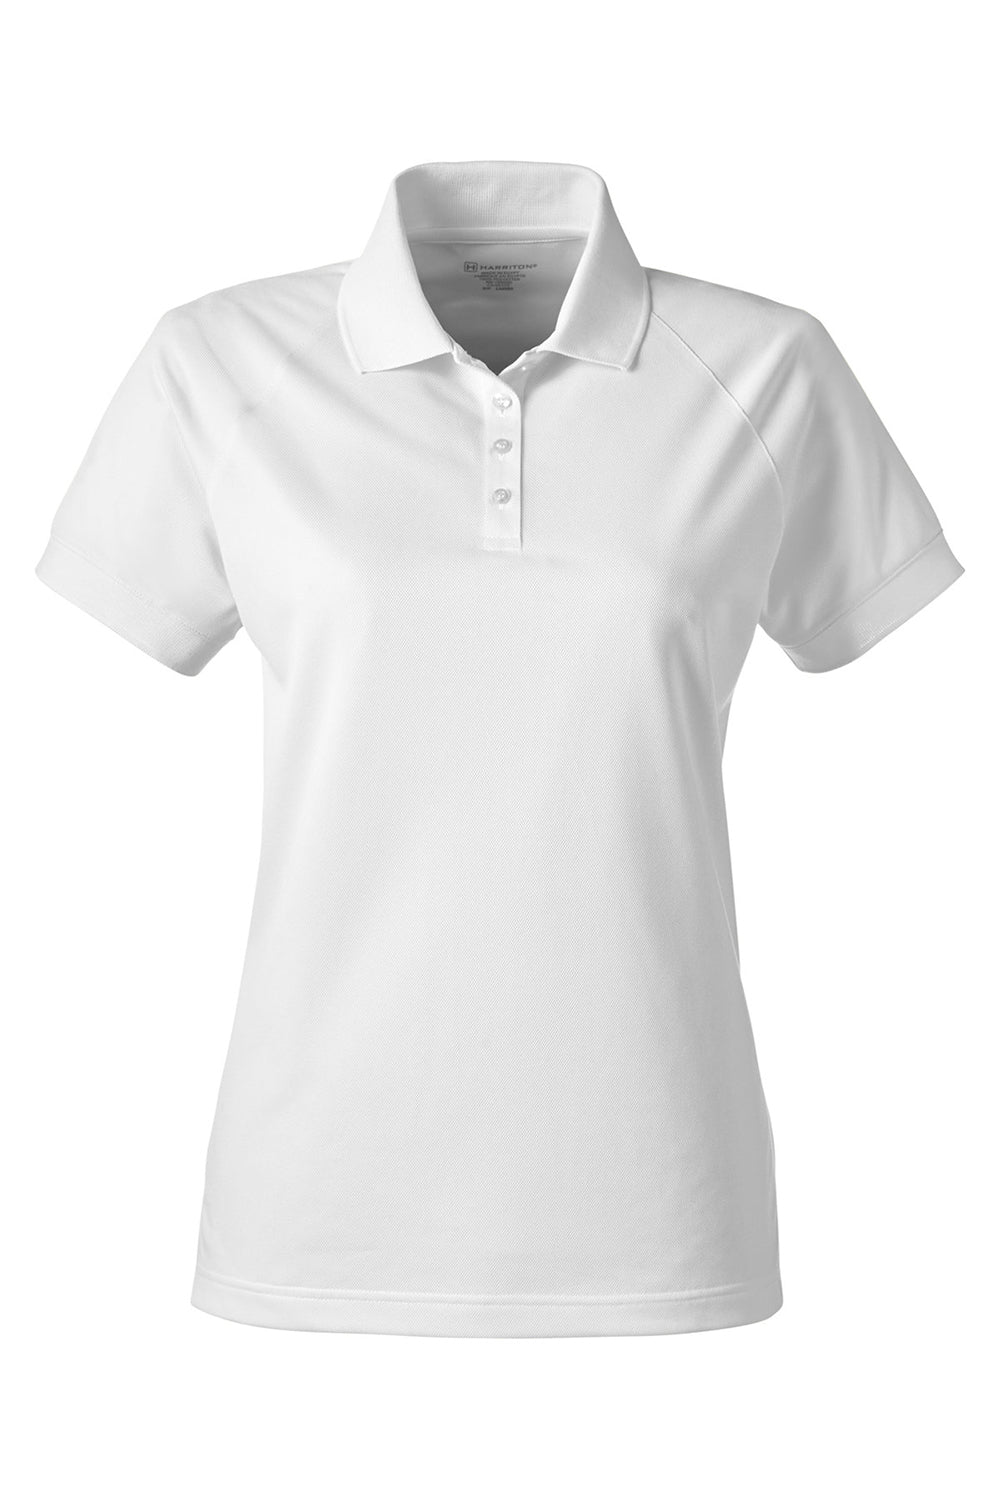 Harriton M208W Womens Charge Moisture Wicking Short Sleeve Polo Shirt White Flat Front